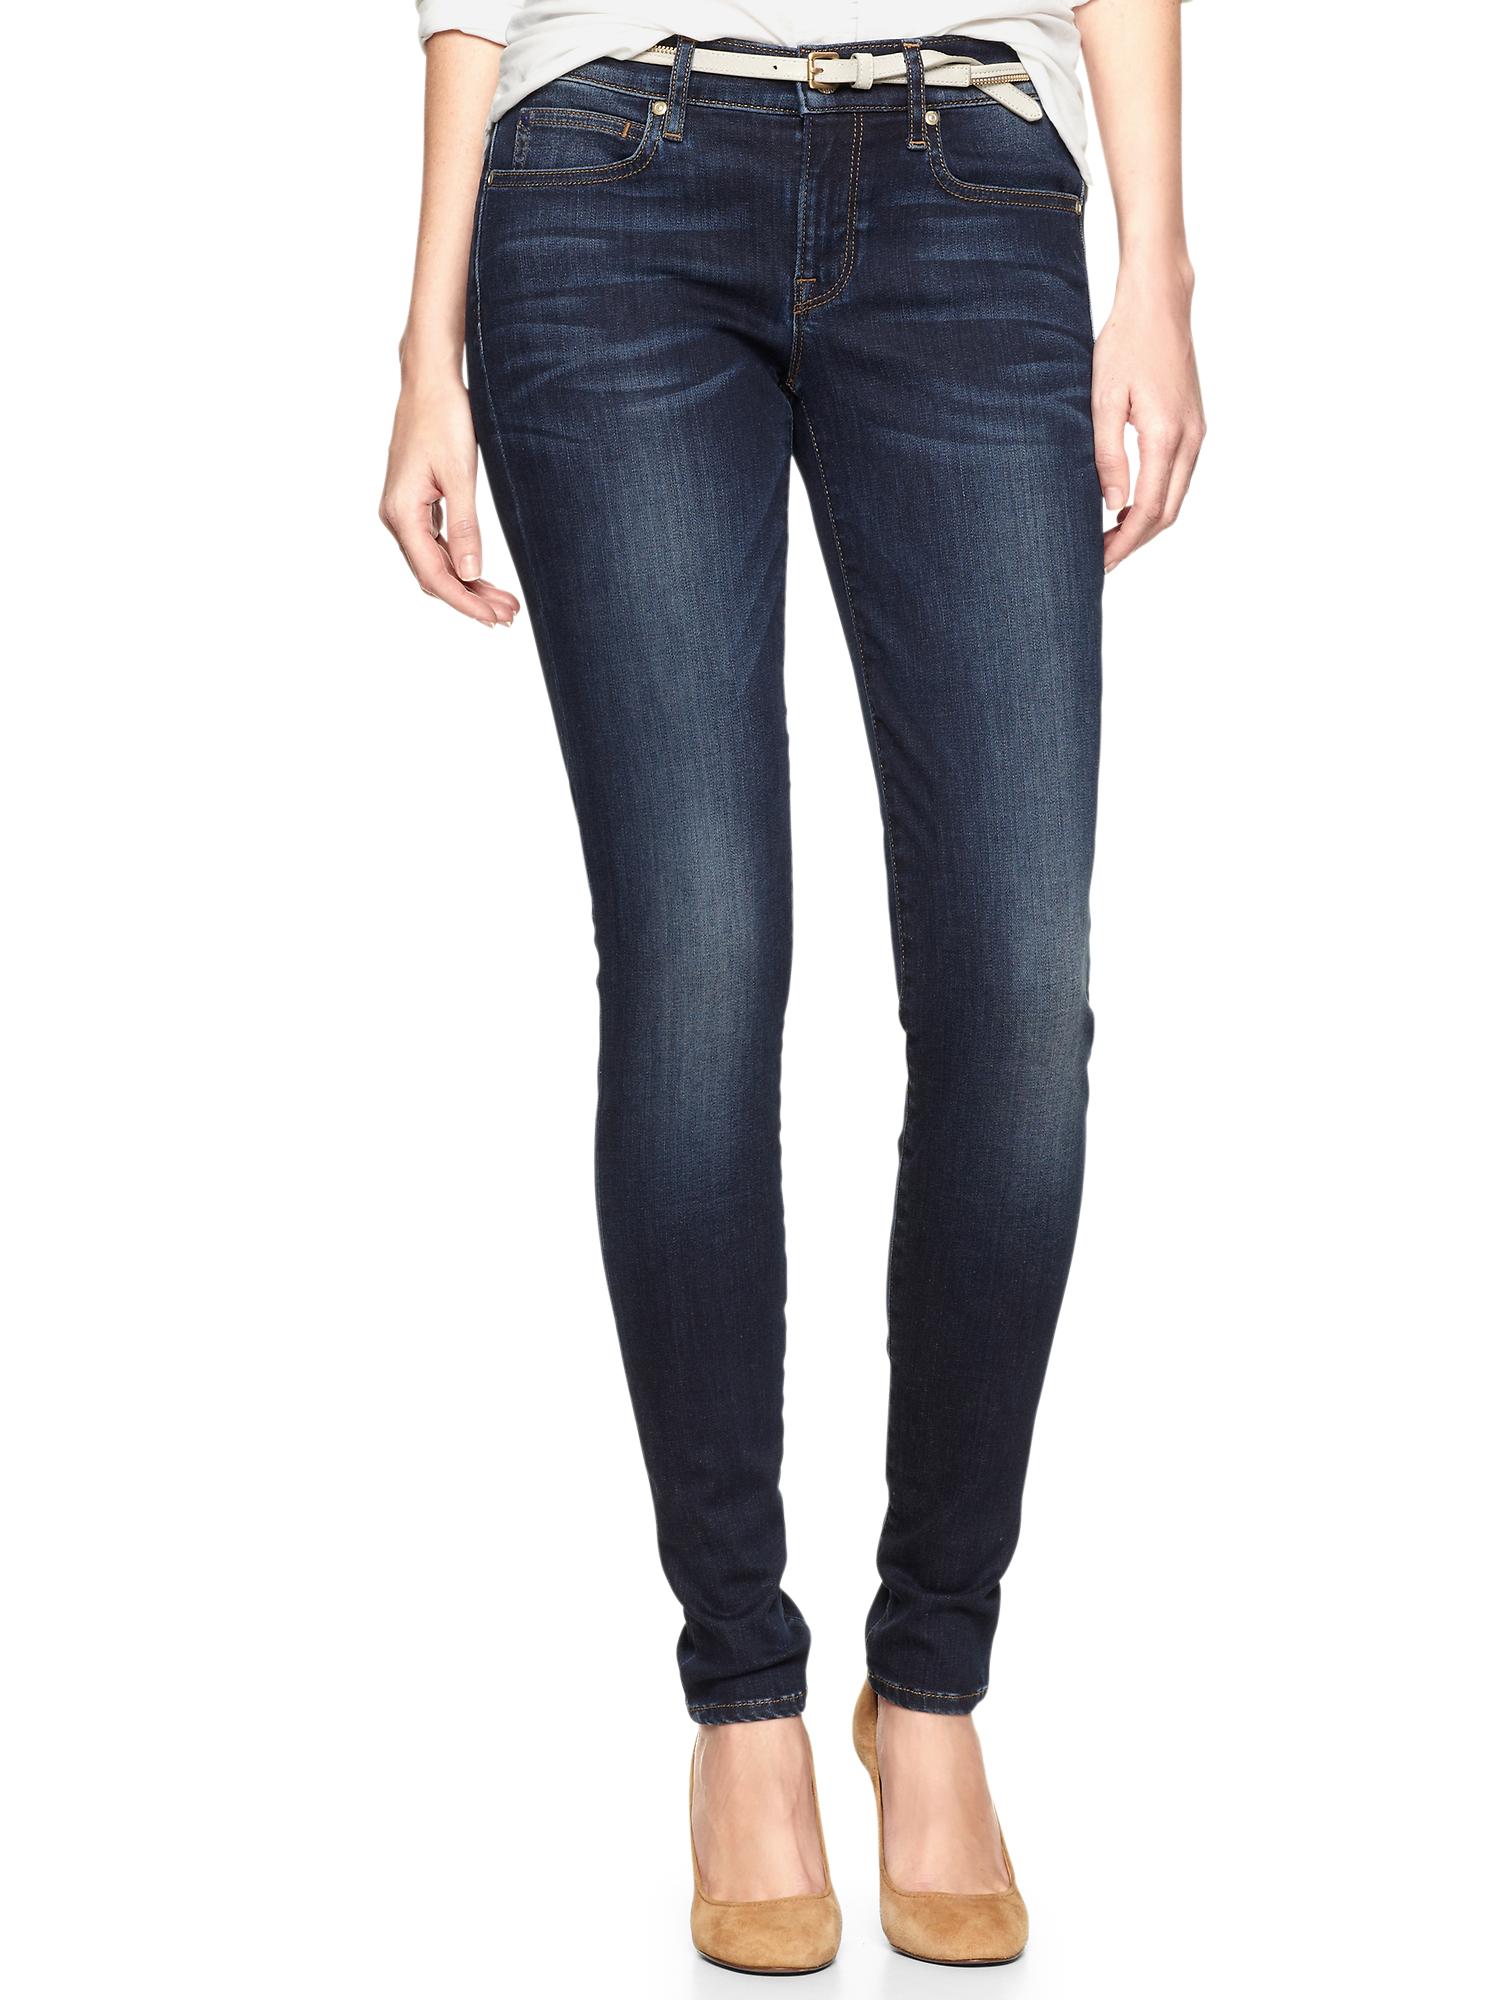 1969 legging jeans | Gap